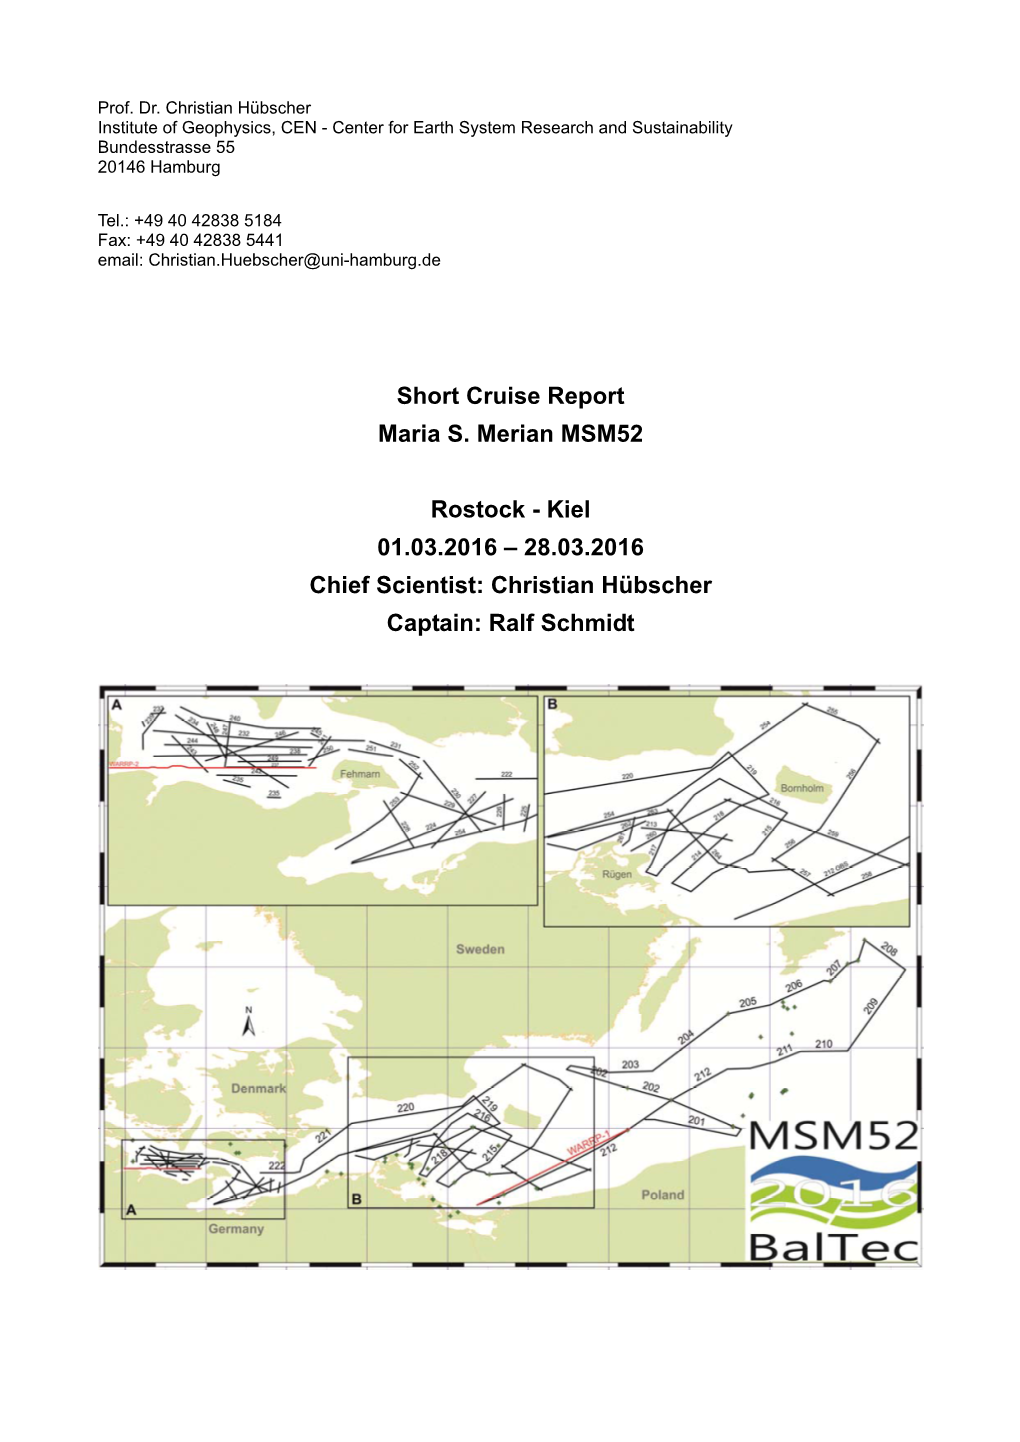 Short Cruise Report Maria S. Merian MSM52 Rostock